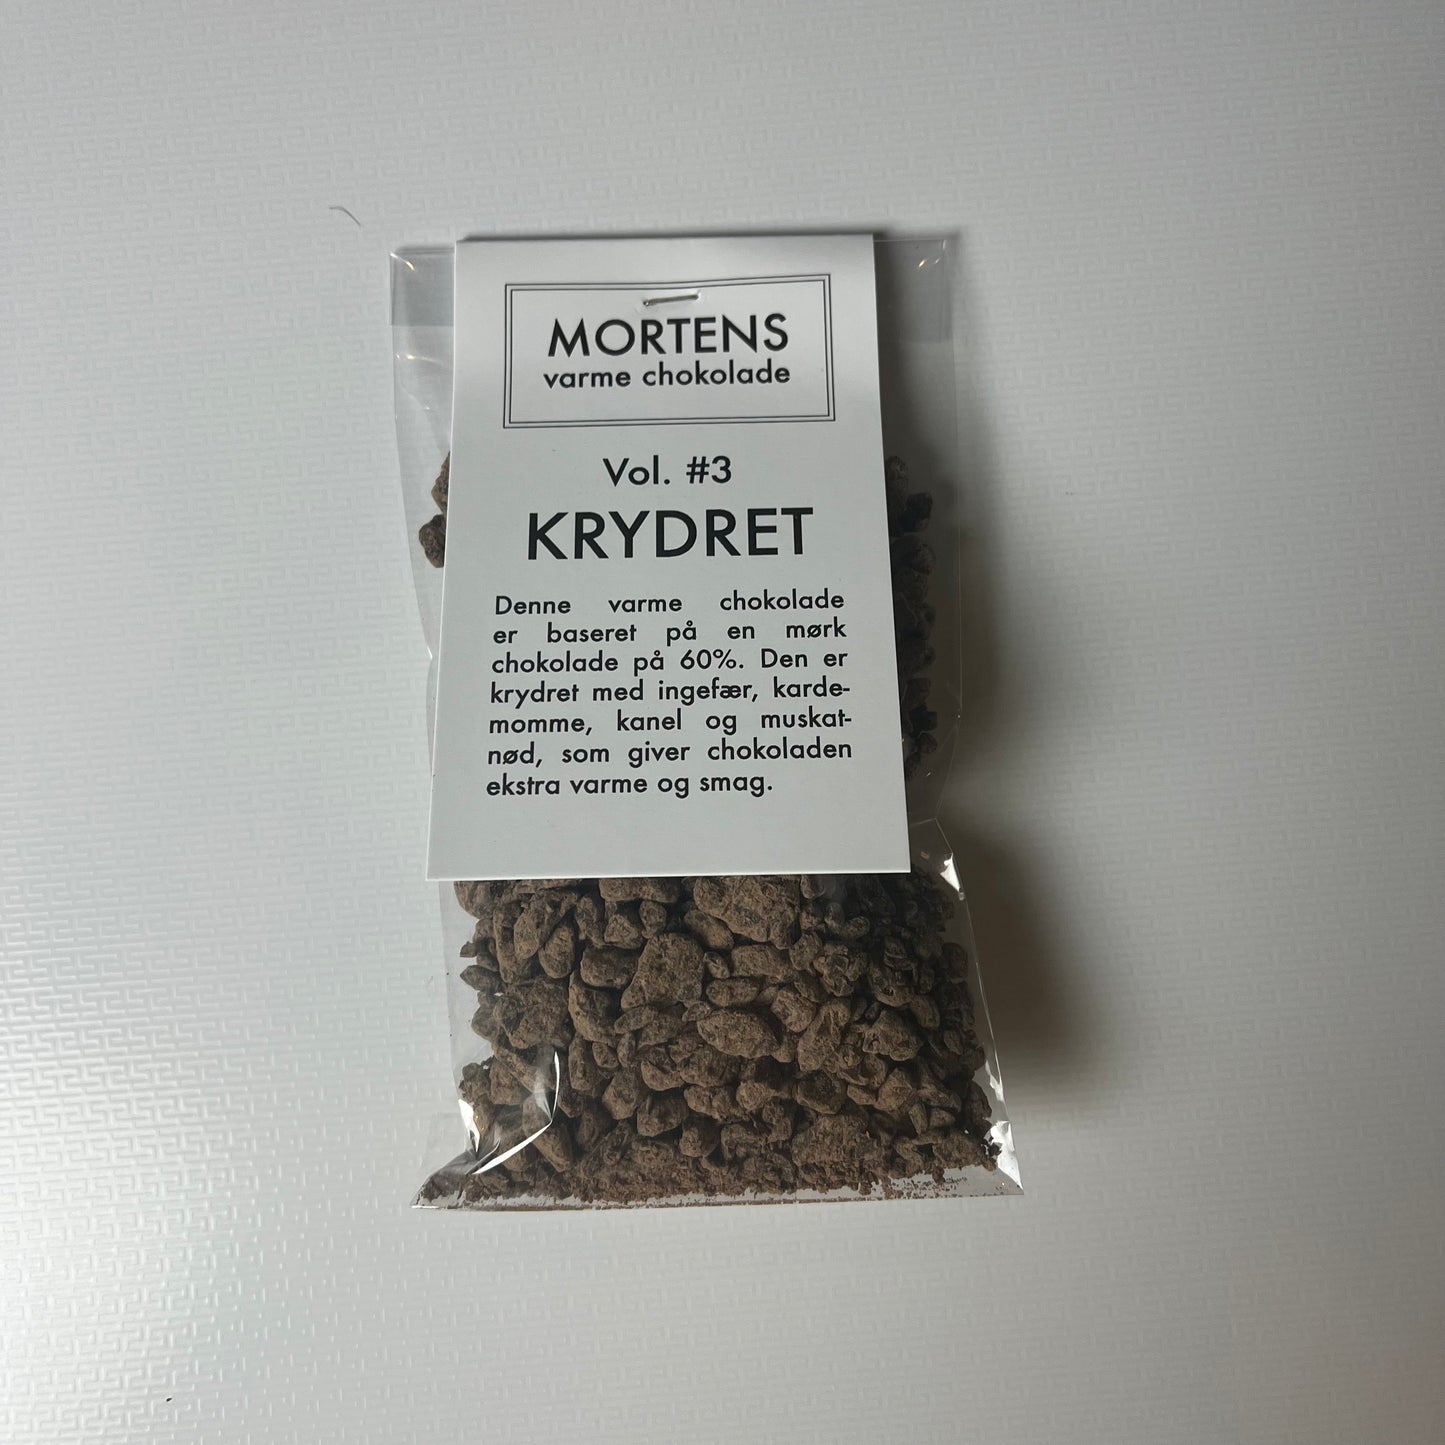 Mortens varme chokolade - 1 pose (KRYDRET)